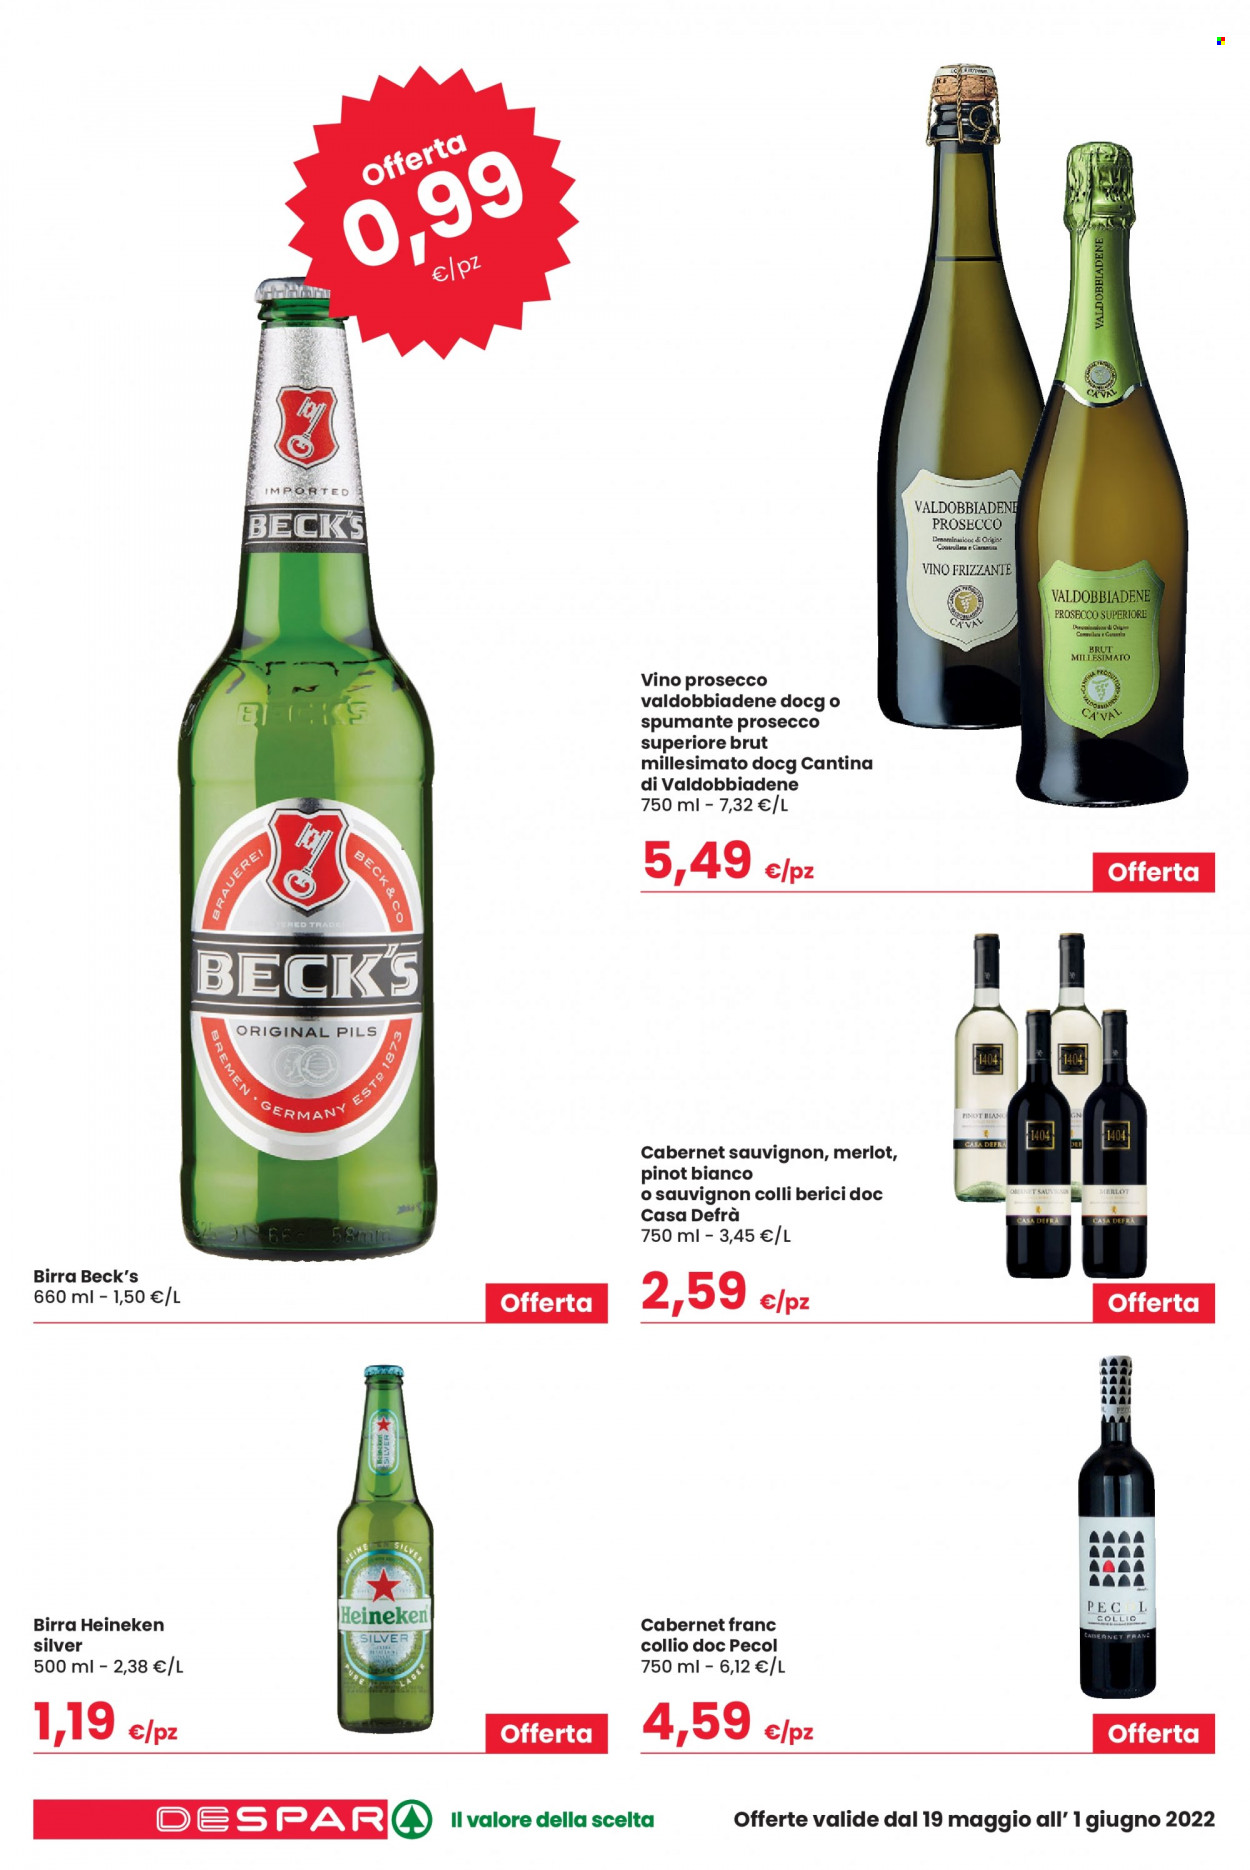 thumbnail - Volantino Despar - 19/5/2022 - 1/6/2022 - Prodotti in offerta - Beck‘s, Heineken, birra, birra tipo pilsner, Cabernet, Cabernet Sauvignon, Merlot, vino bianco, vino frizzante, Valdobbiadene, Spumante, Prosecco, vino, Pinot Bianco, Sauvignon. Pagina 18.